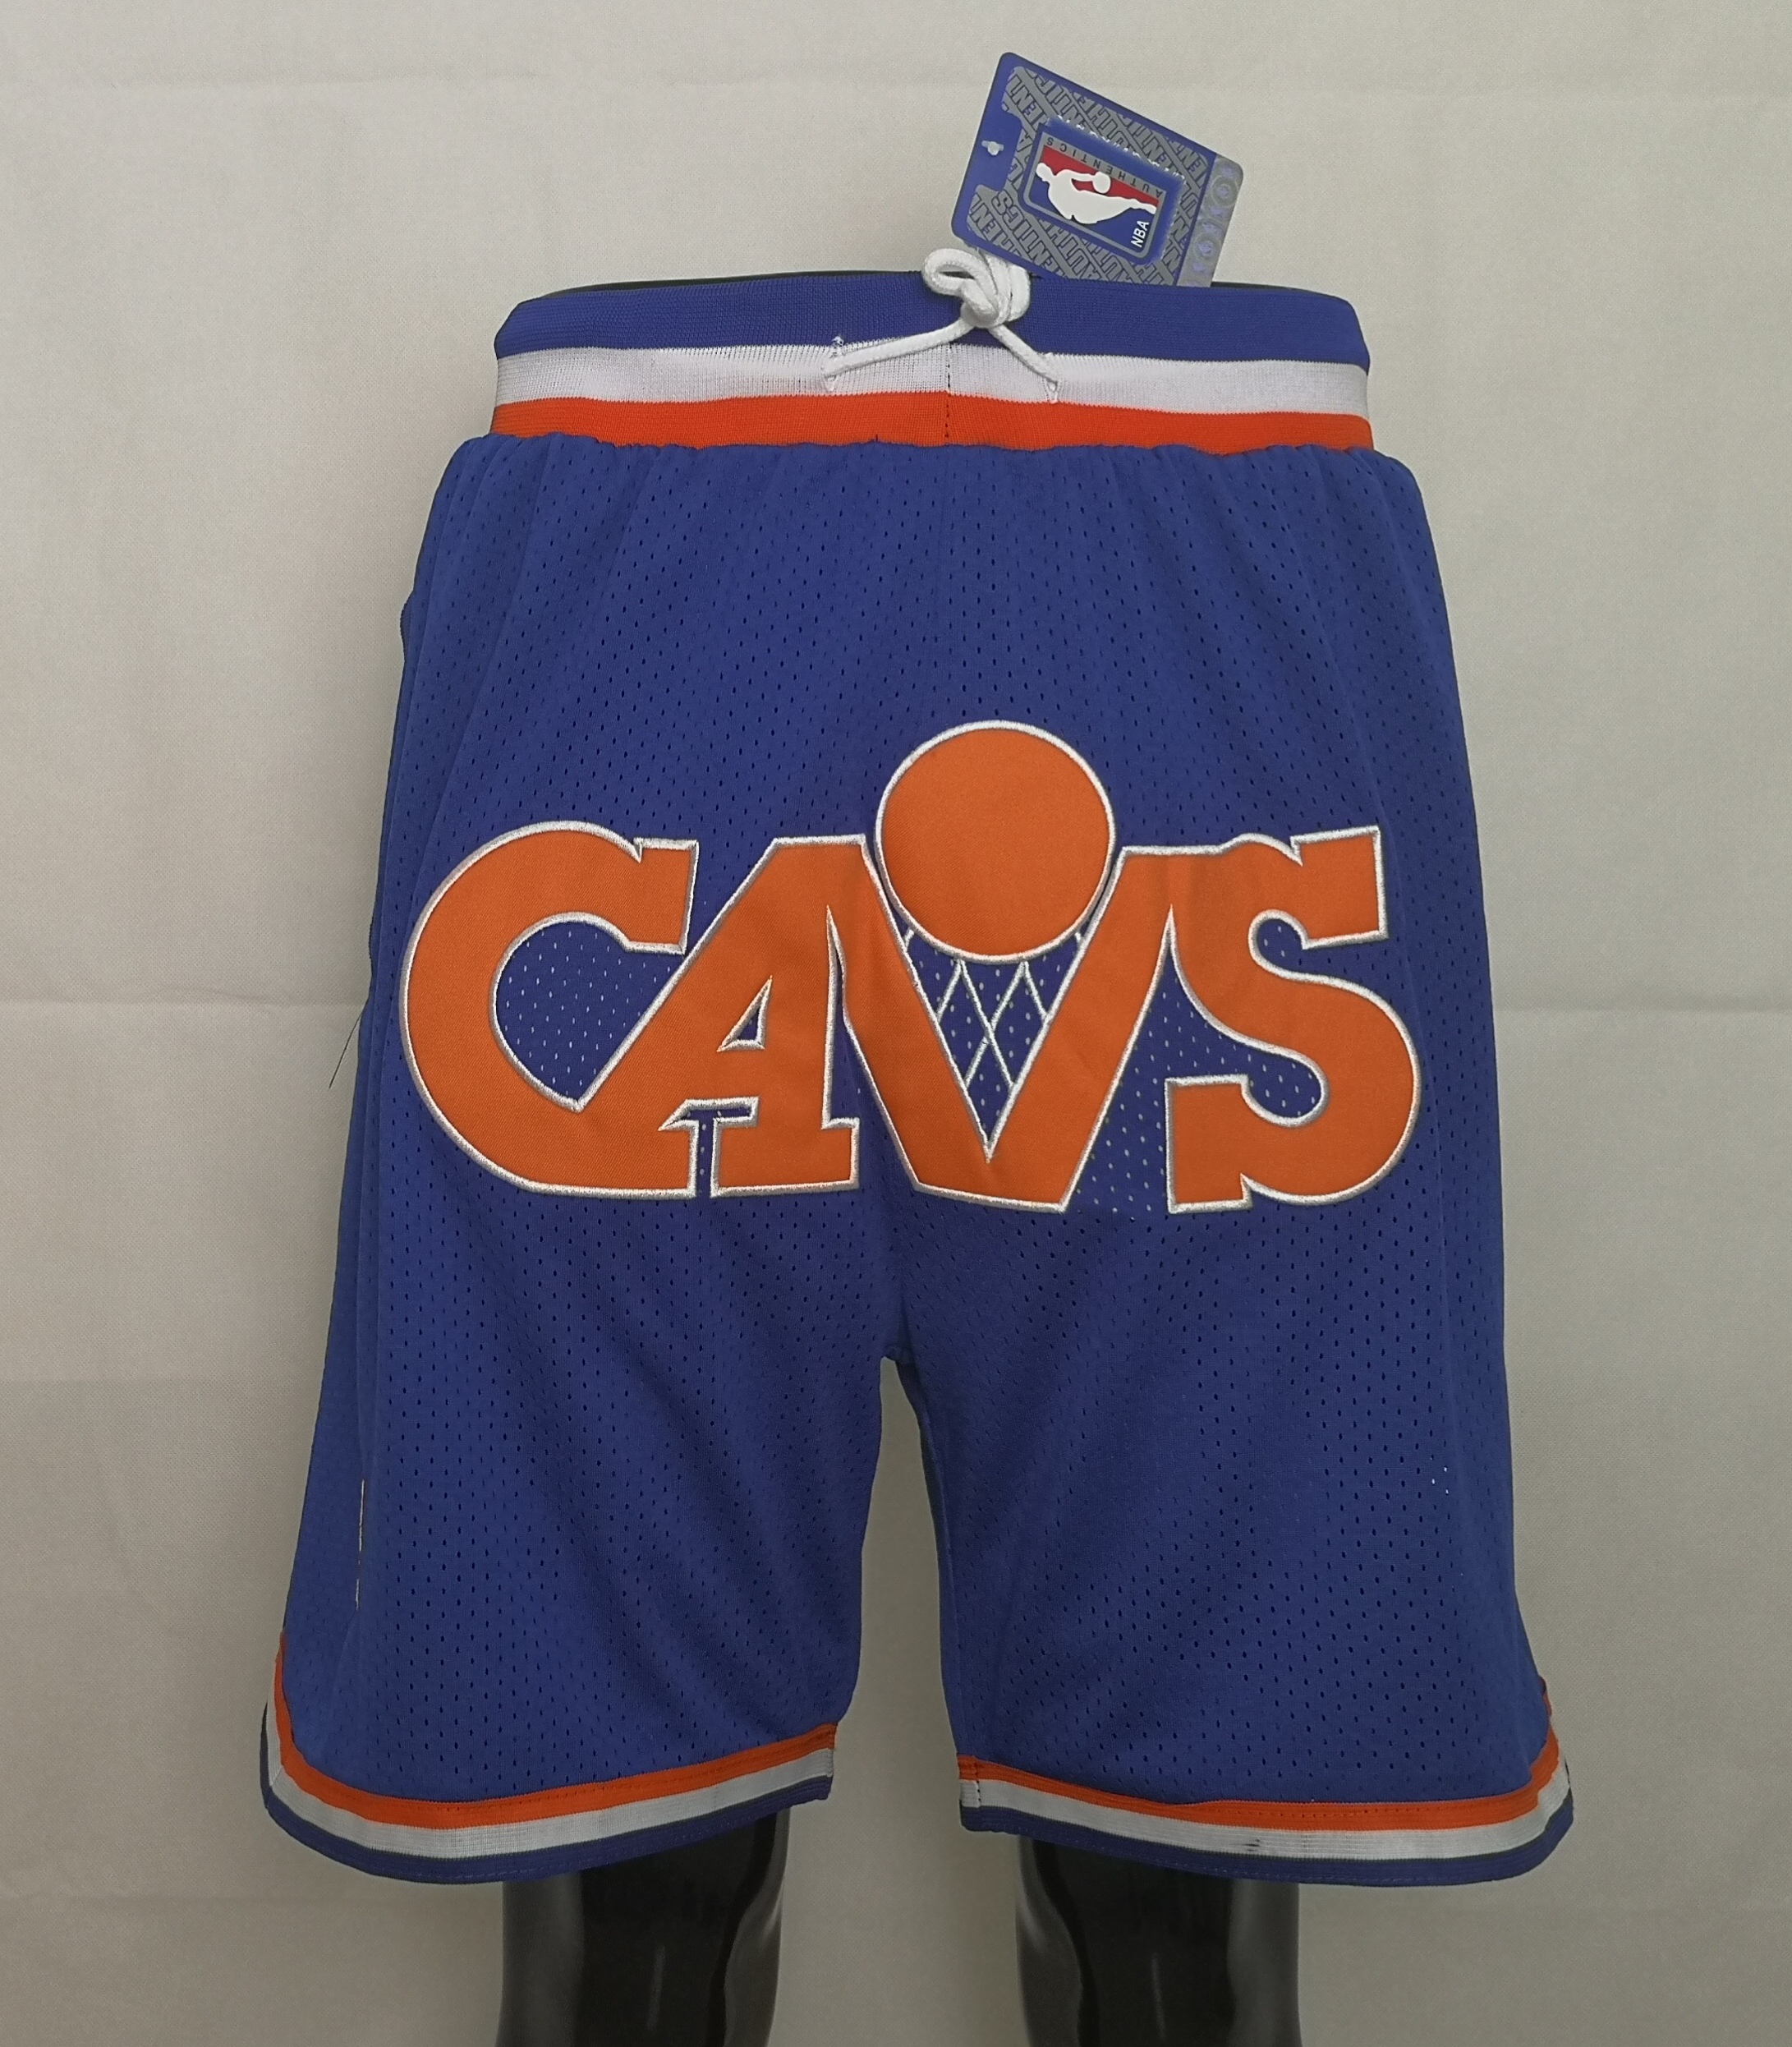 2020 Men NBA Cleveland Cavaliers blue shorts